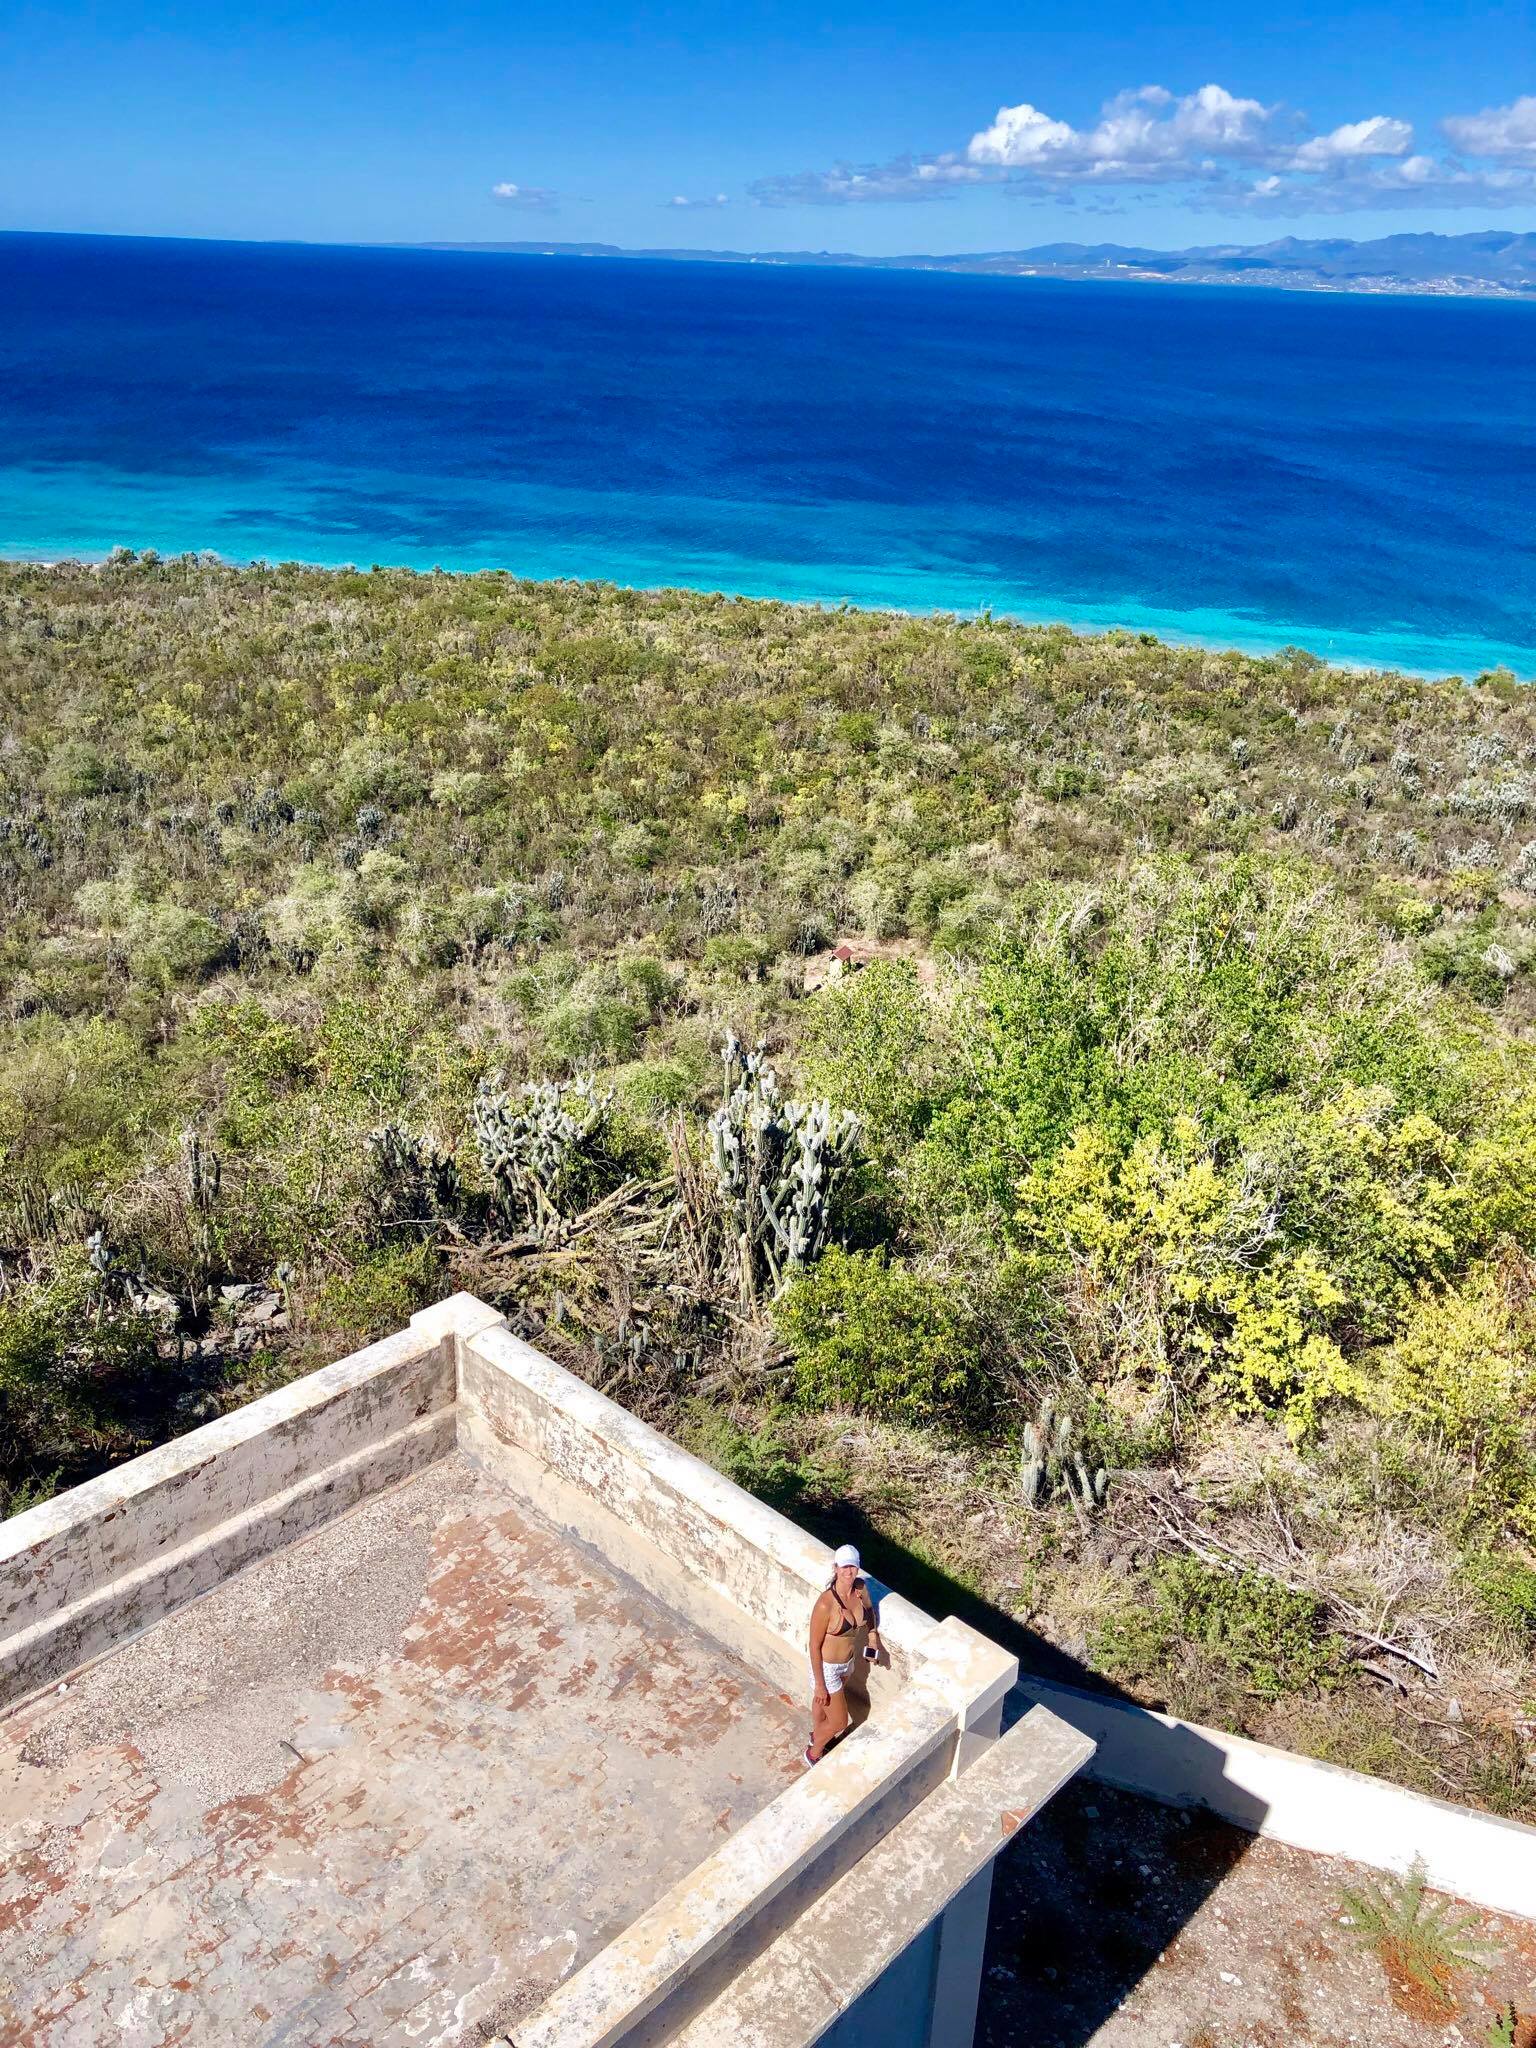 Sailing Life Day 331 Solo Adventures to Caja de Muertos  Coffin Island in Ponce, Puerto Rico17.jpg